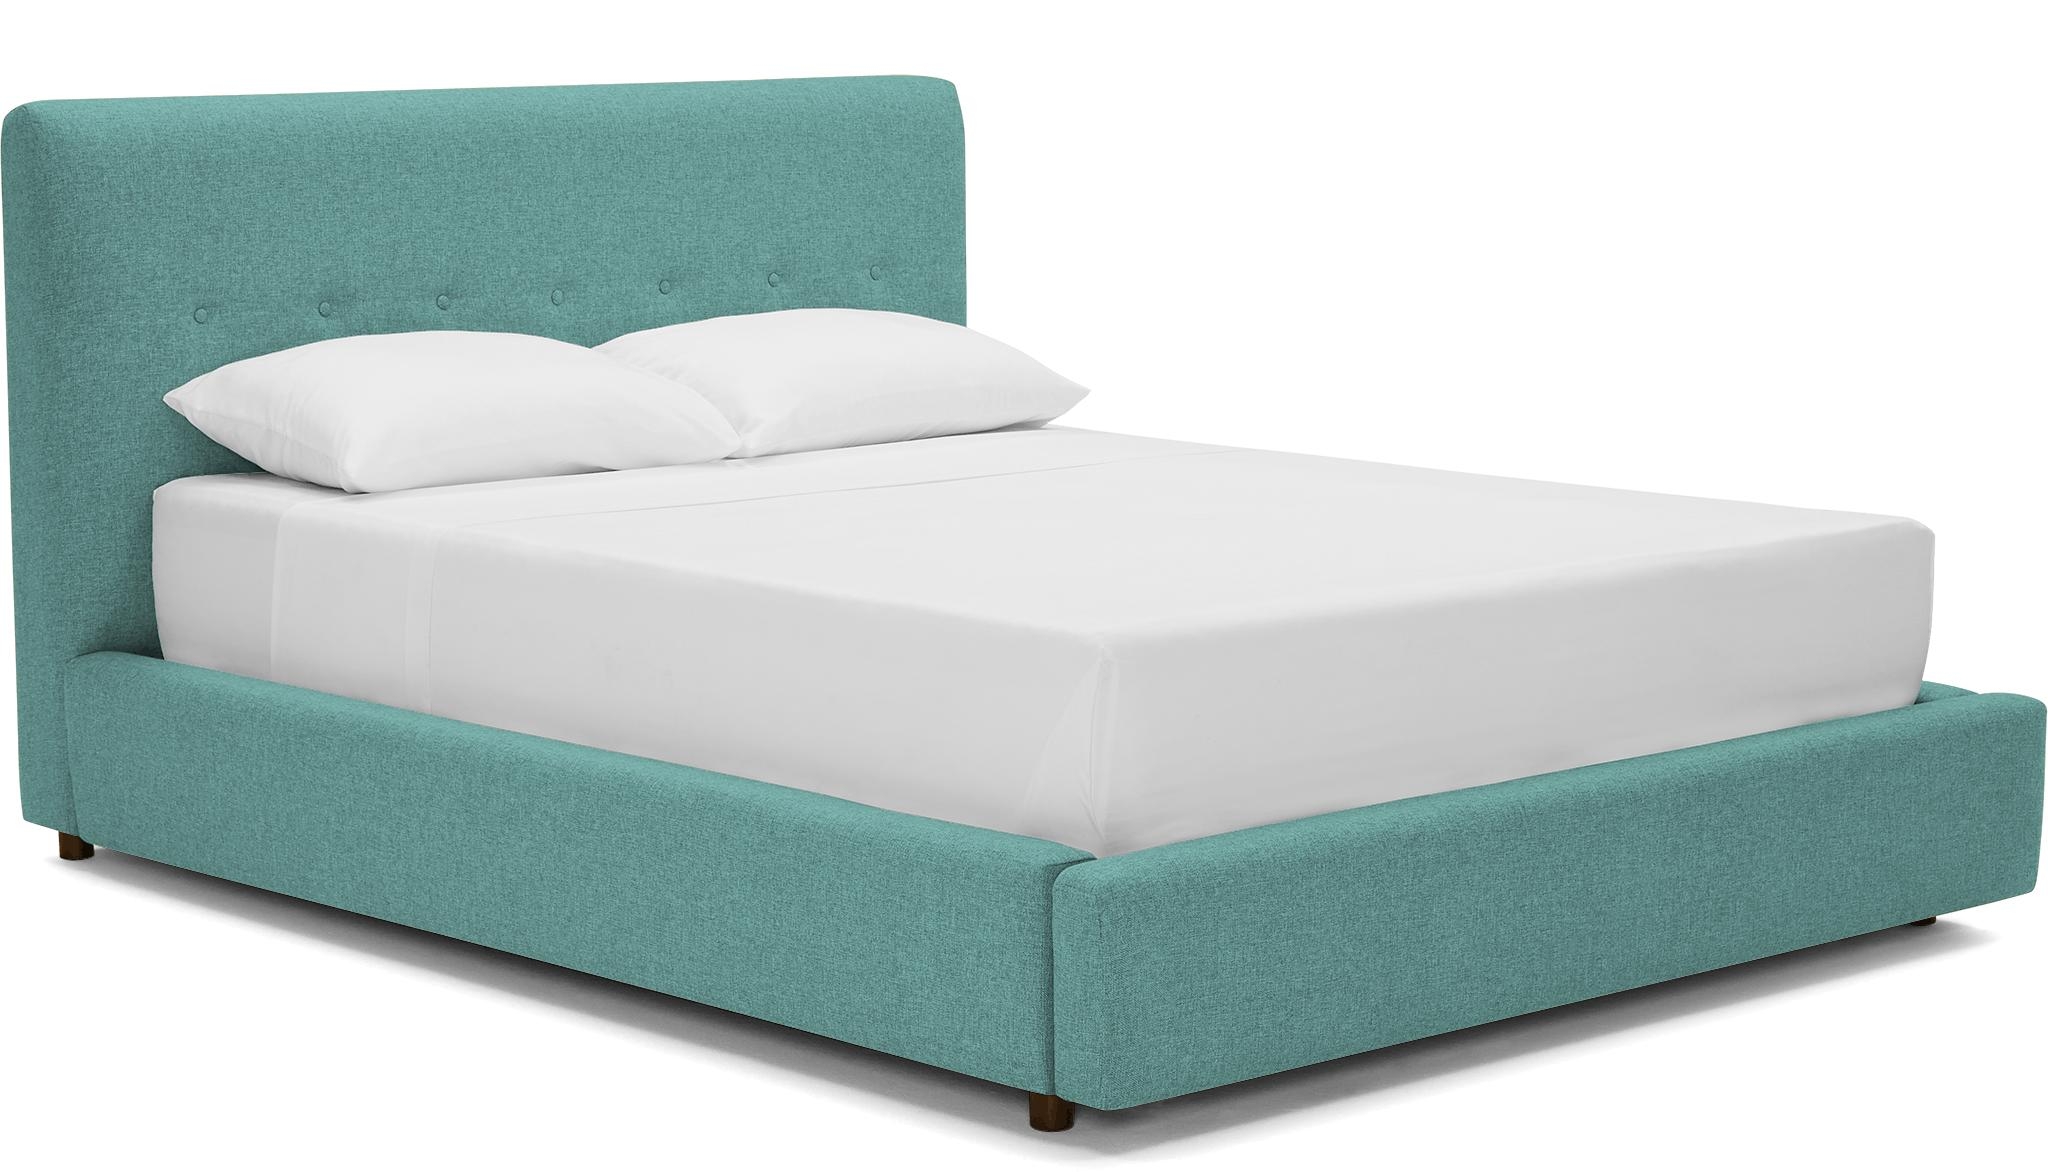 Green Alvin Mid Century Modern Storage Bed - Essence Aqua - Mocha - Queen - Image 1